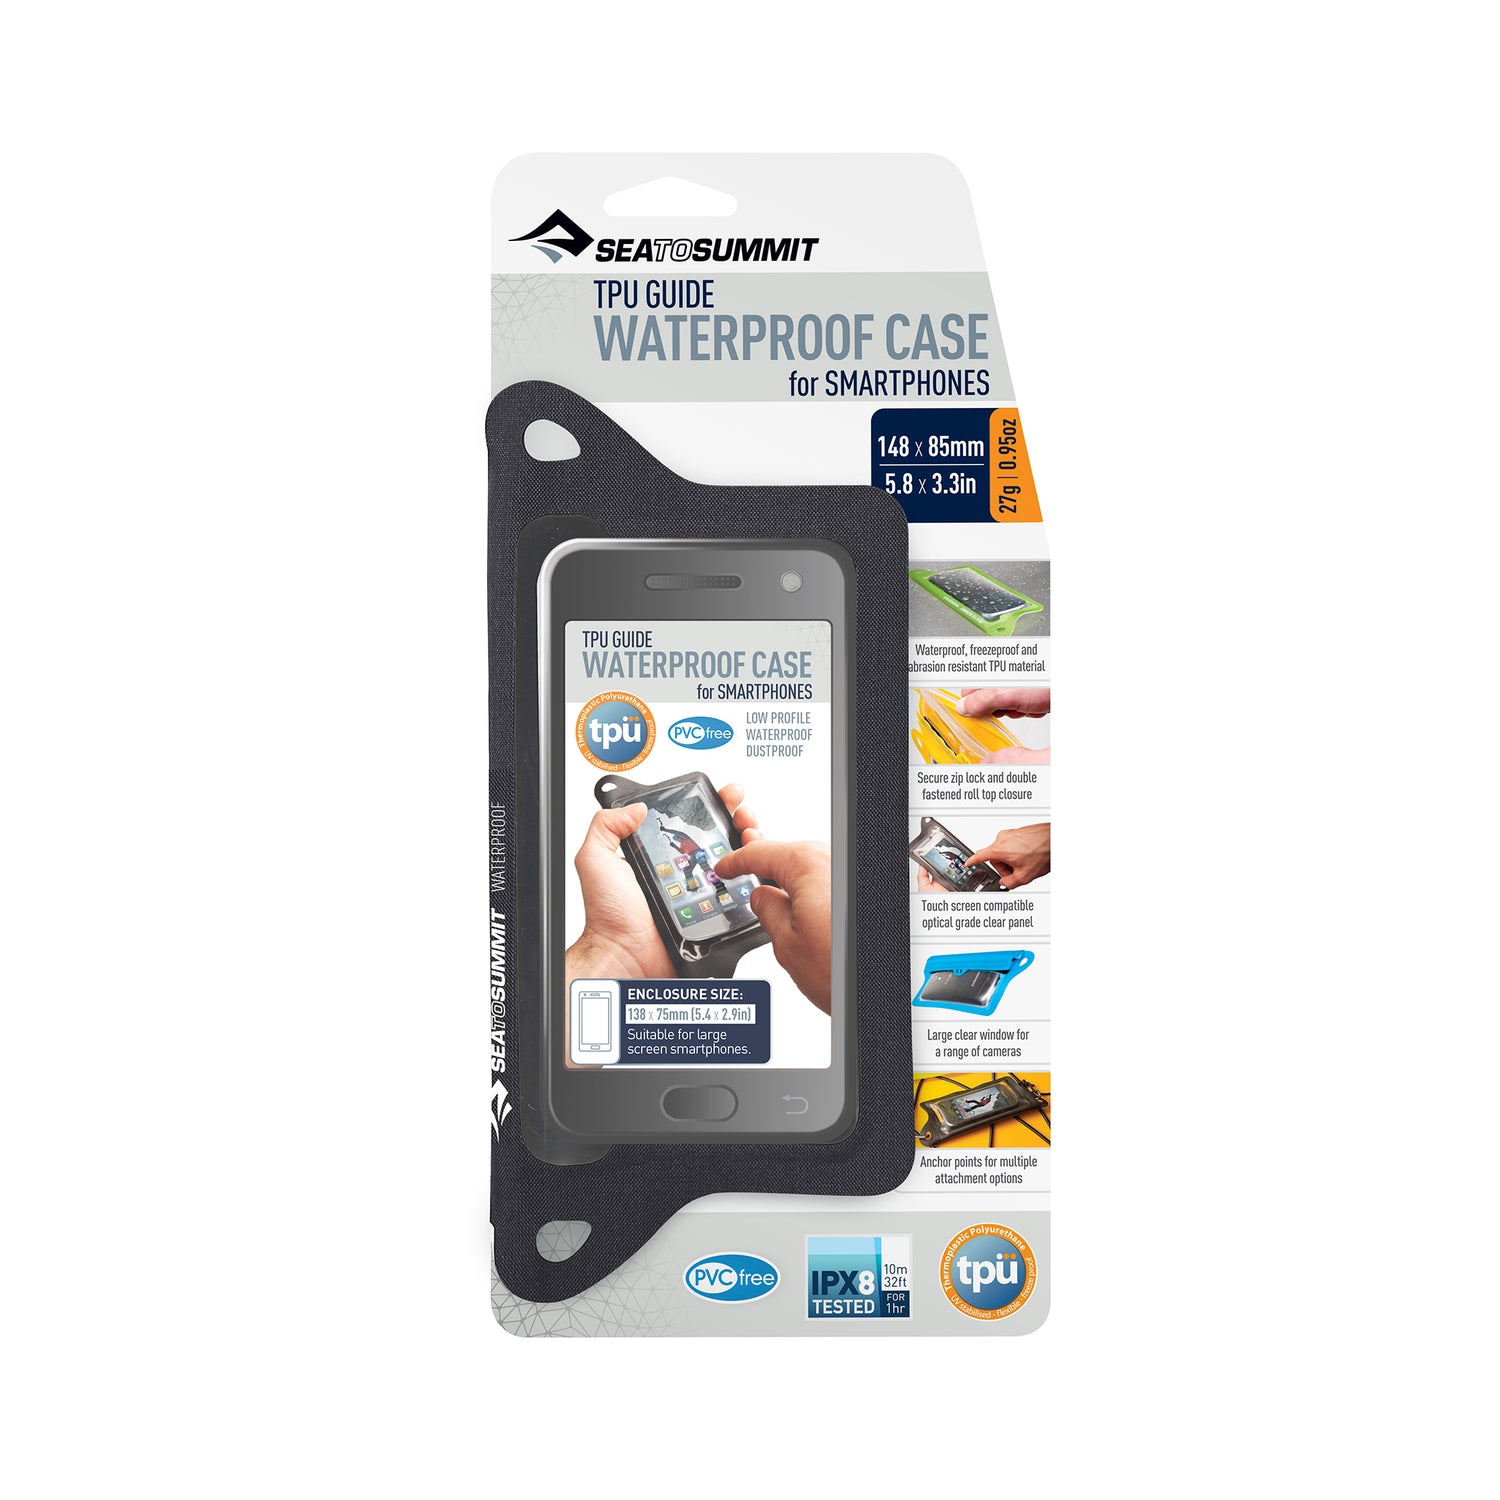 Sea to Summit TPU Guide Waterproof Case for Smartphones (Black)